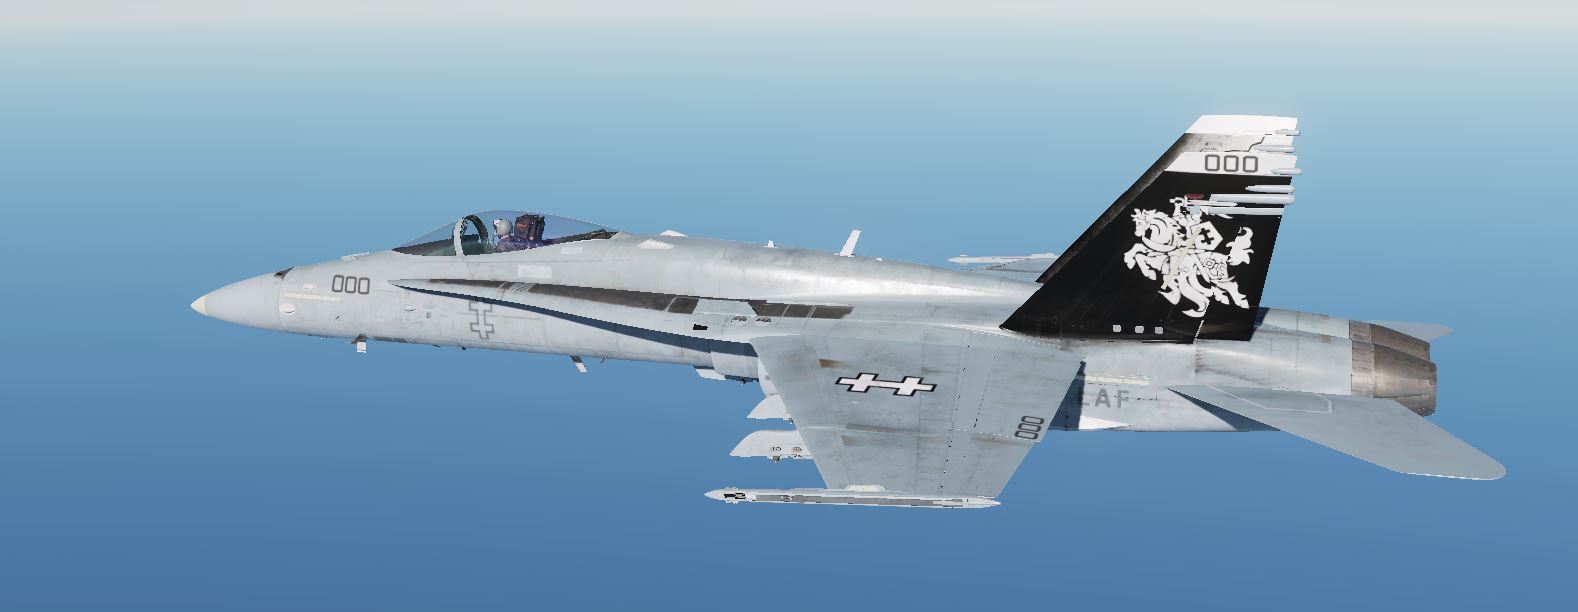 Fictional LTU team livery for F/A-18C